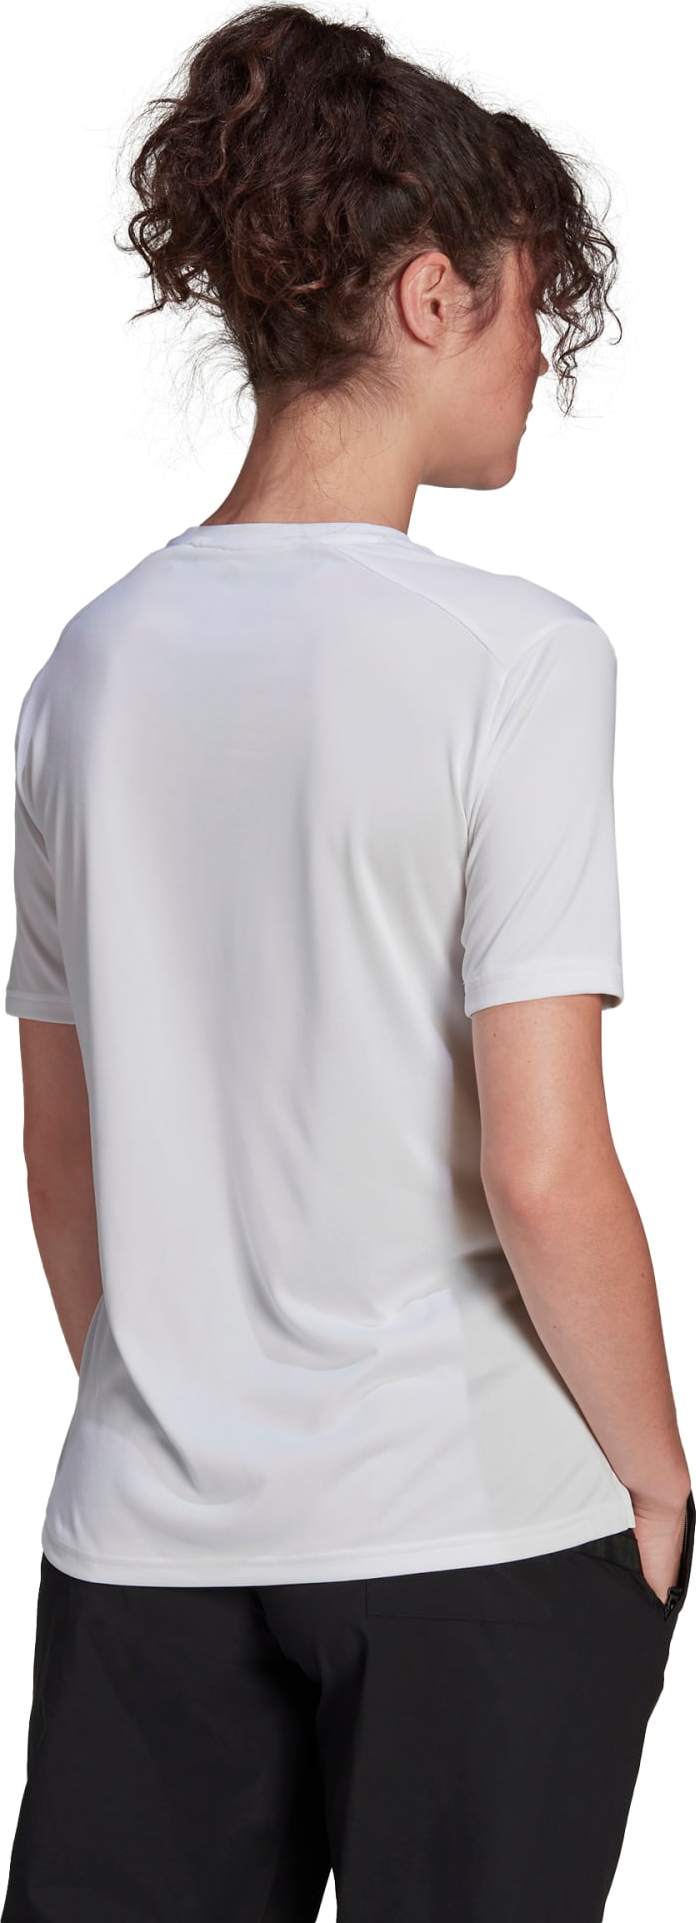 Women's Terrex Multi T-Shirt White Adidas